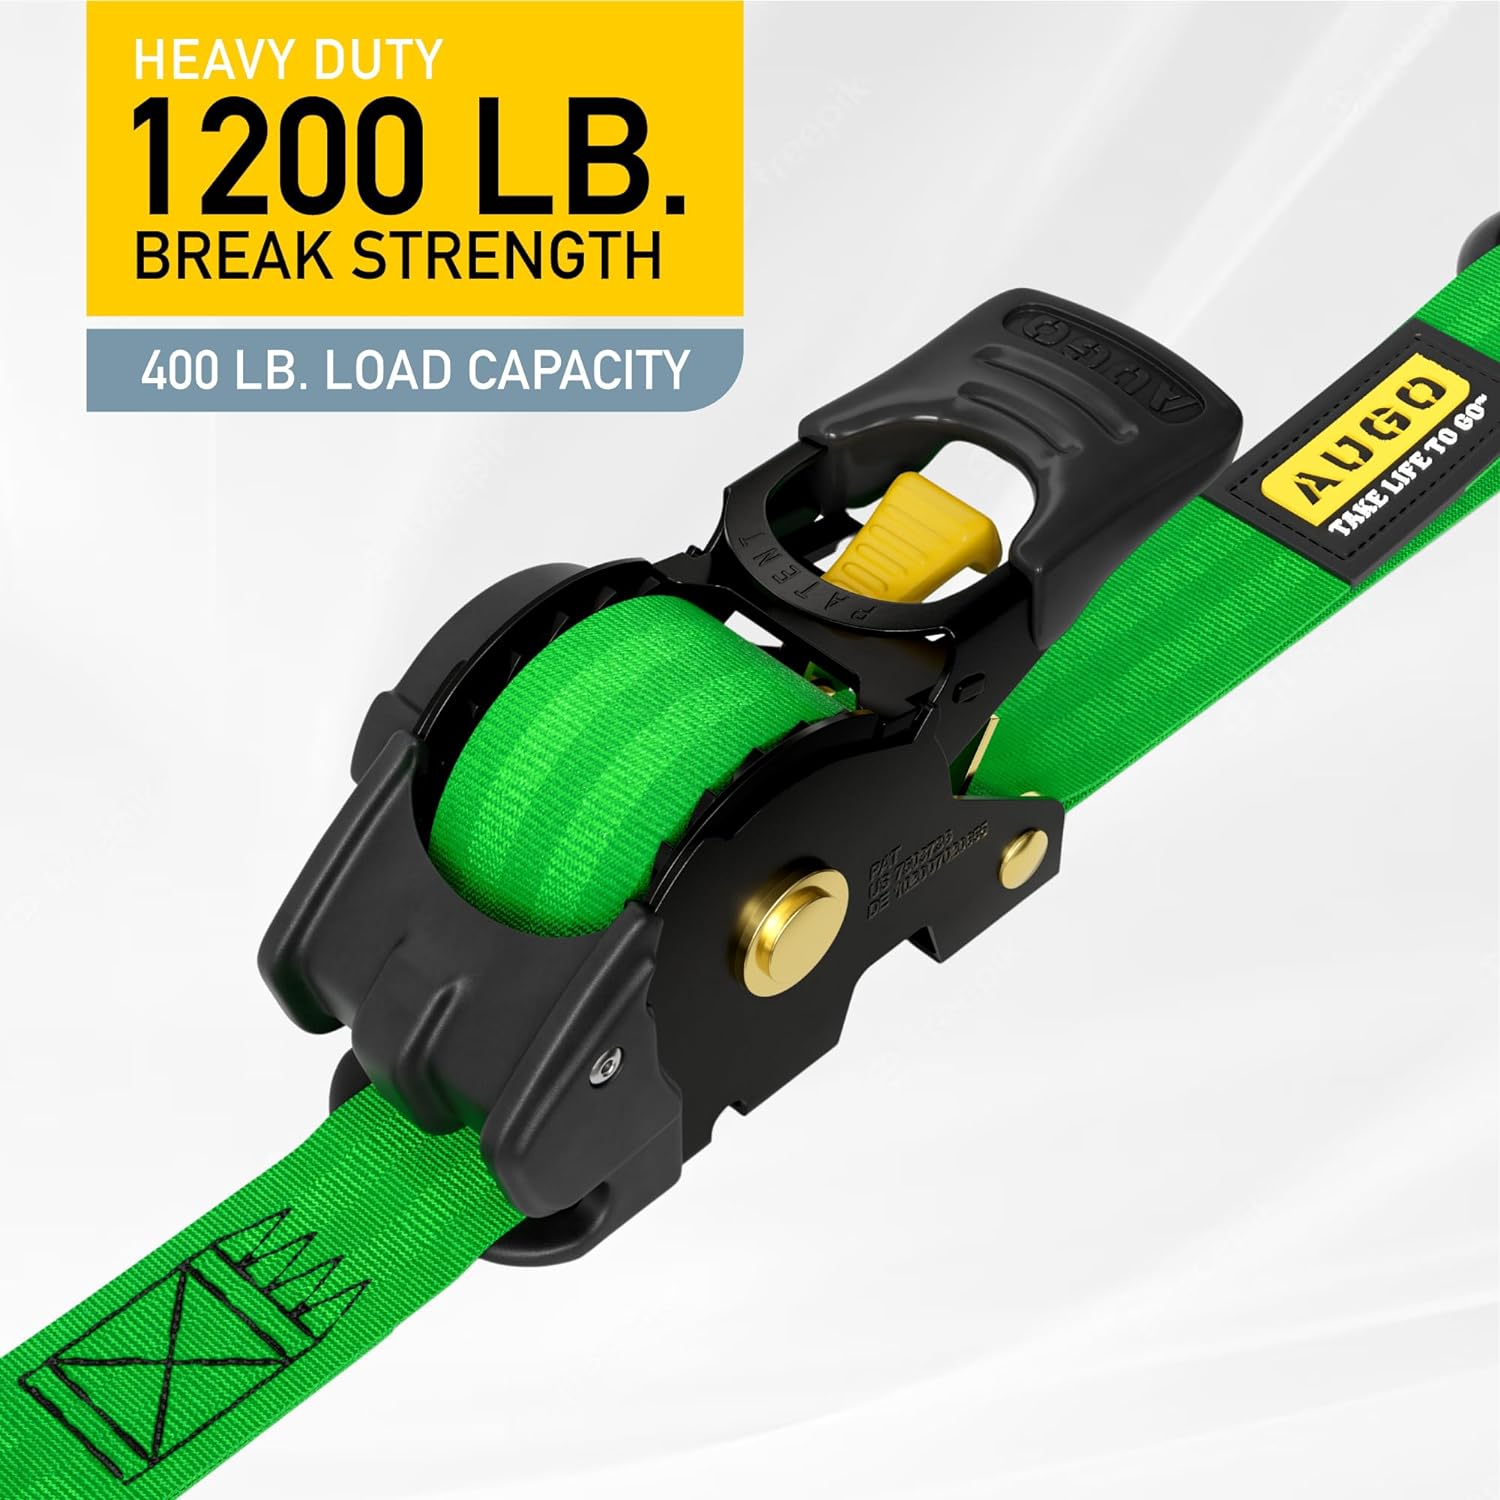 Retractable Ratchet Straps - 2 Pack - 1200 lb Break Strength